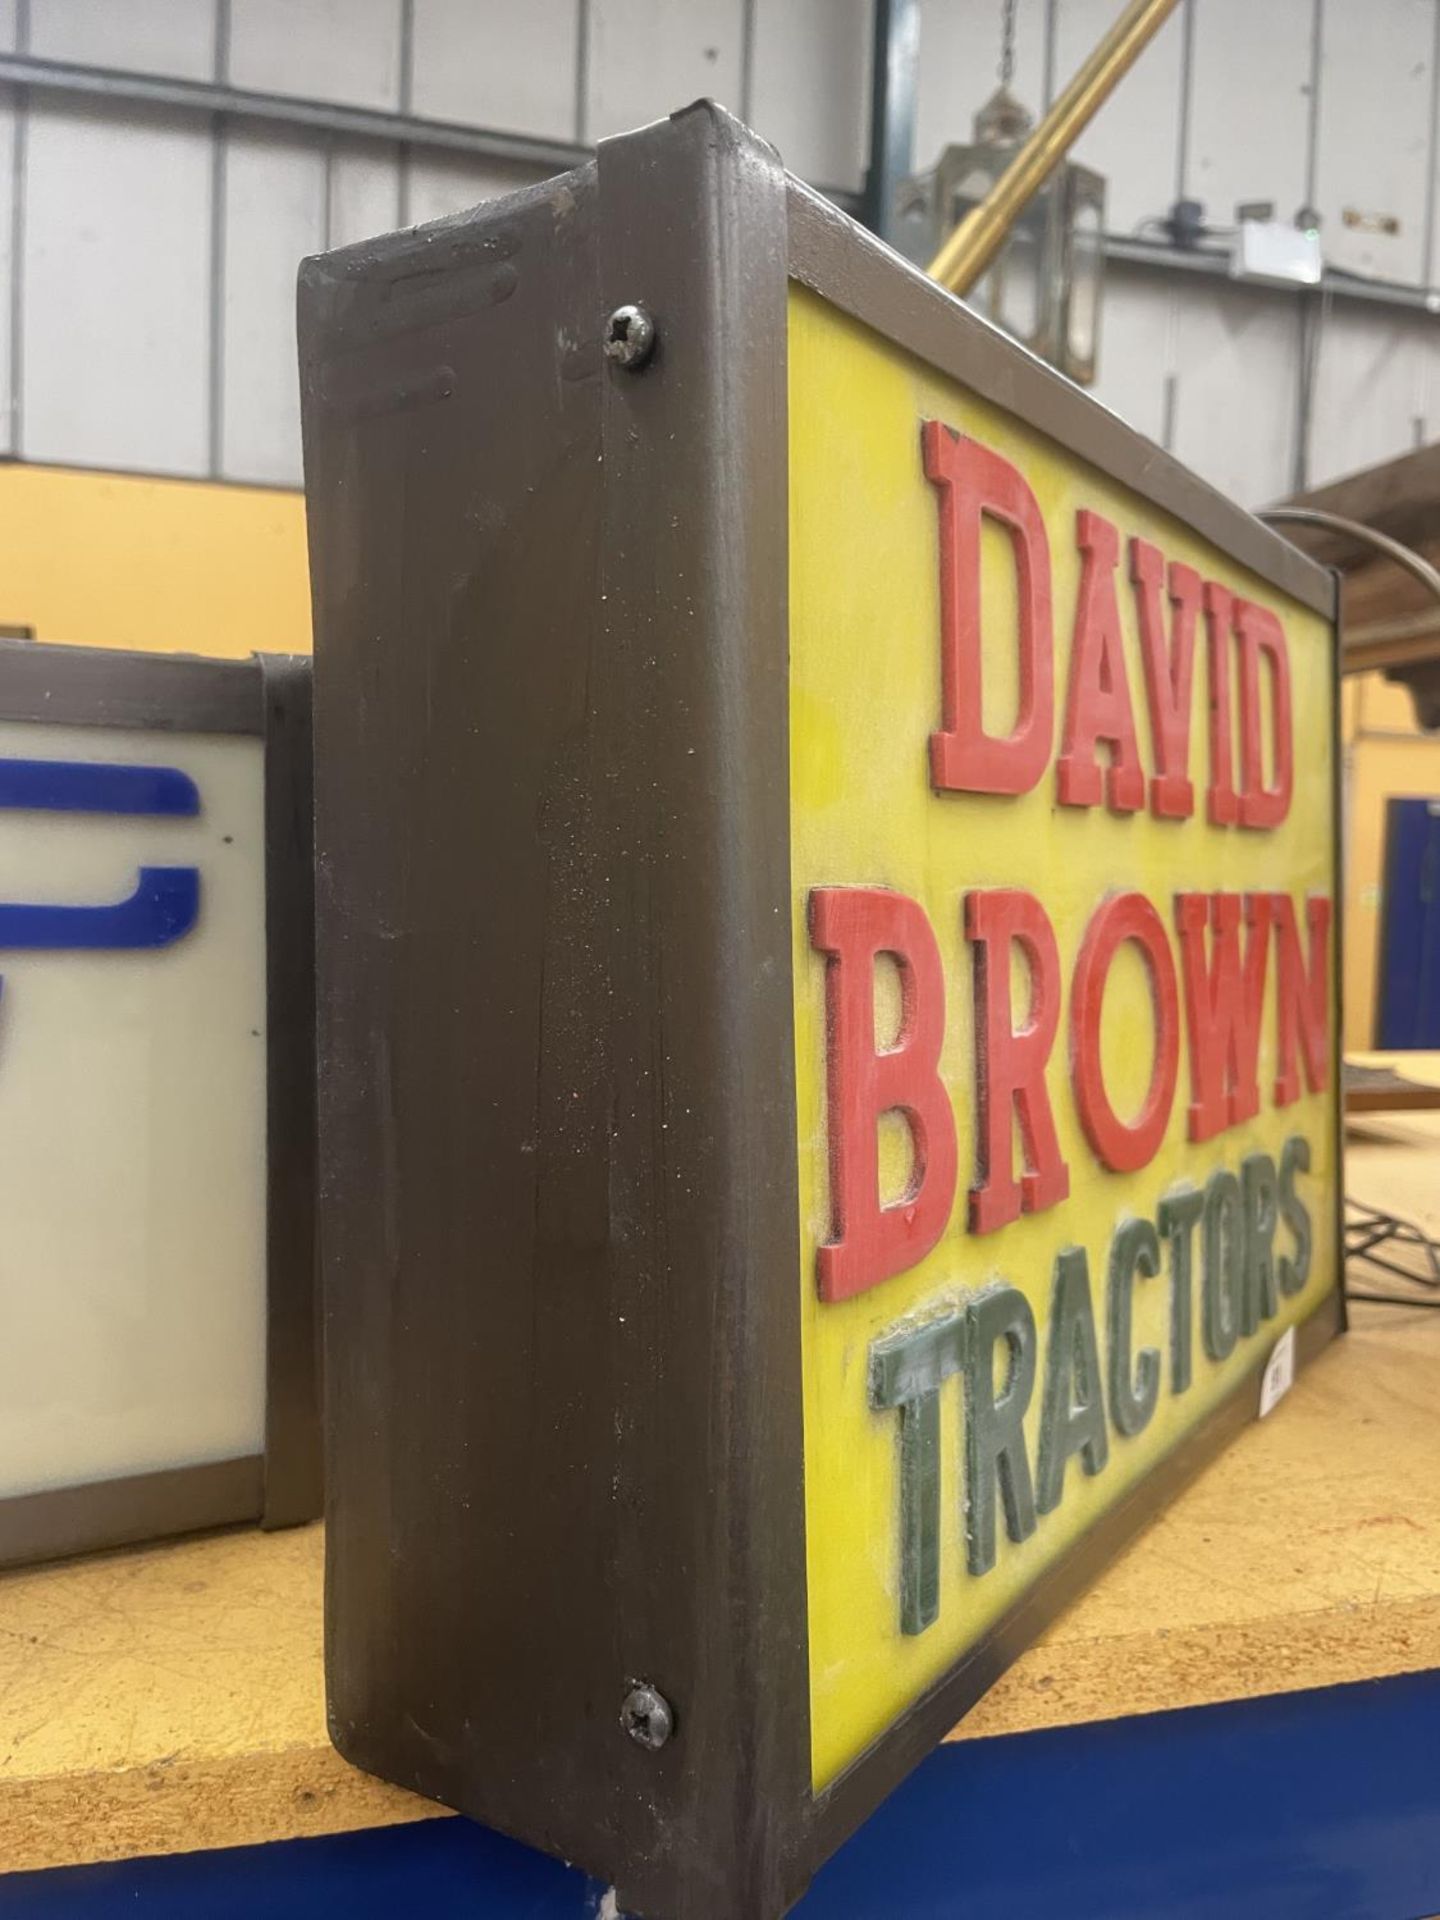 A DAVID BROWN TRACTORS ILLUMINATED LIGHT BOX SIGN - Image 4 of 4